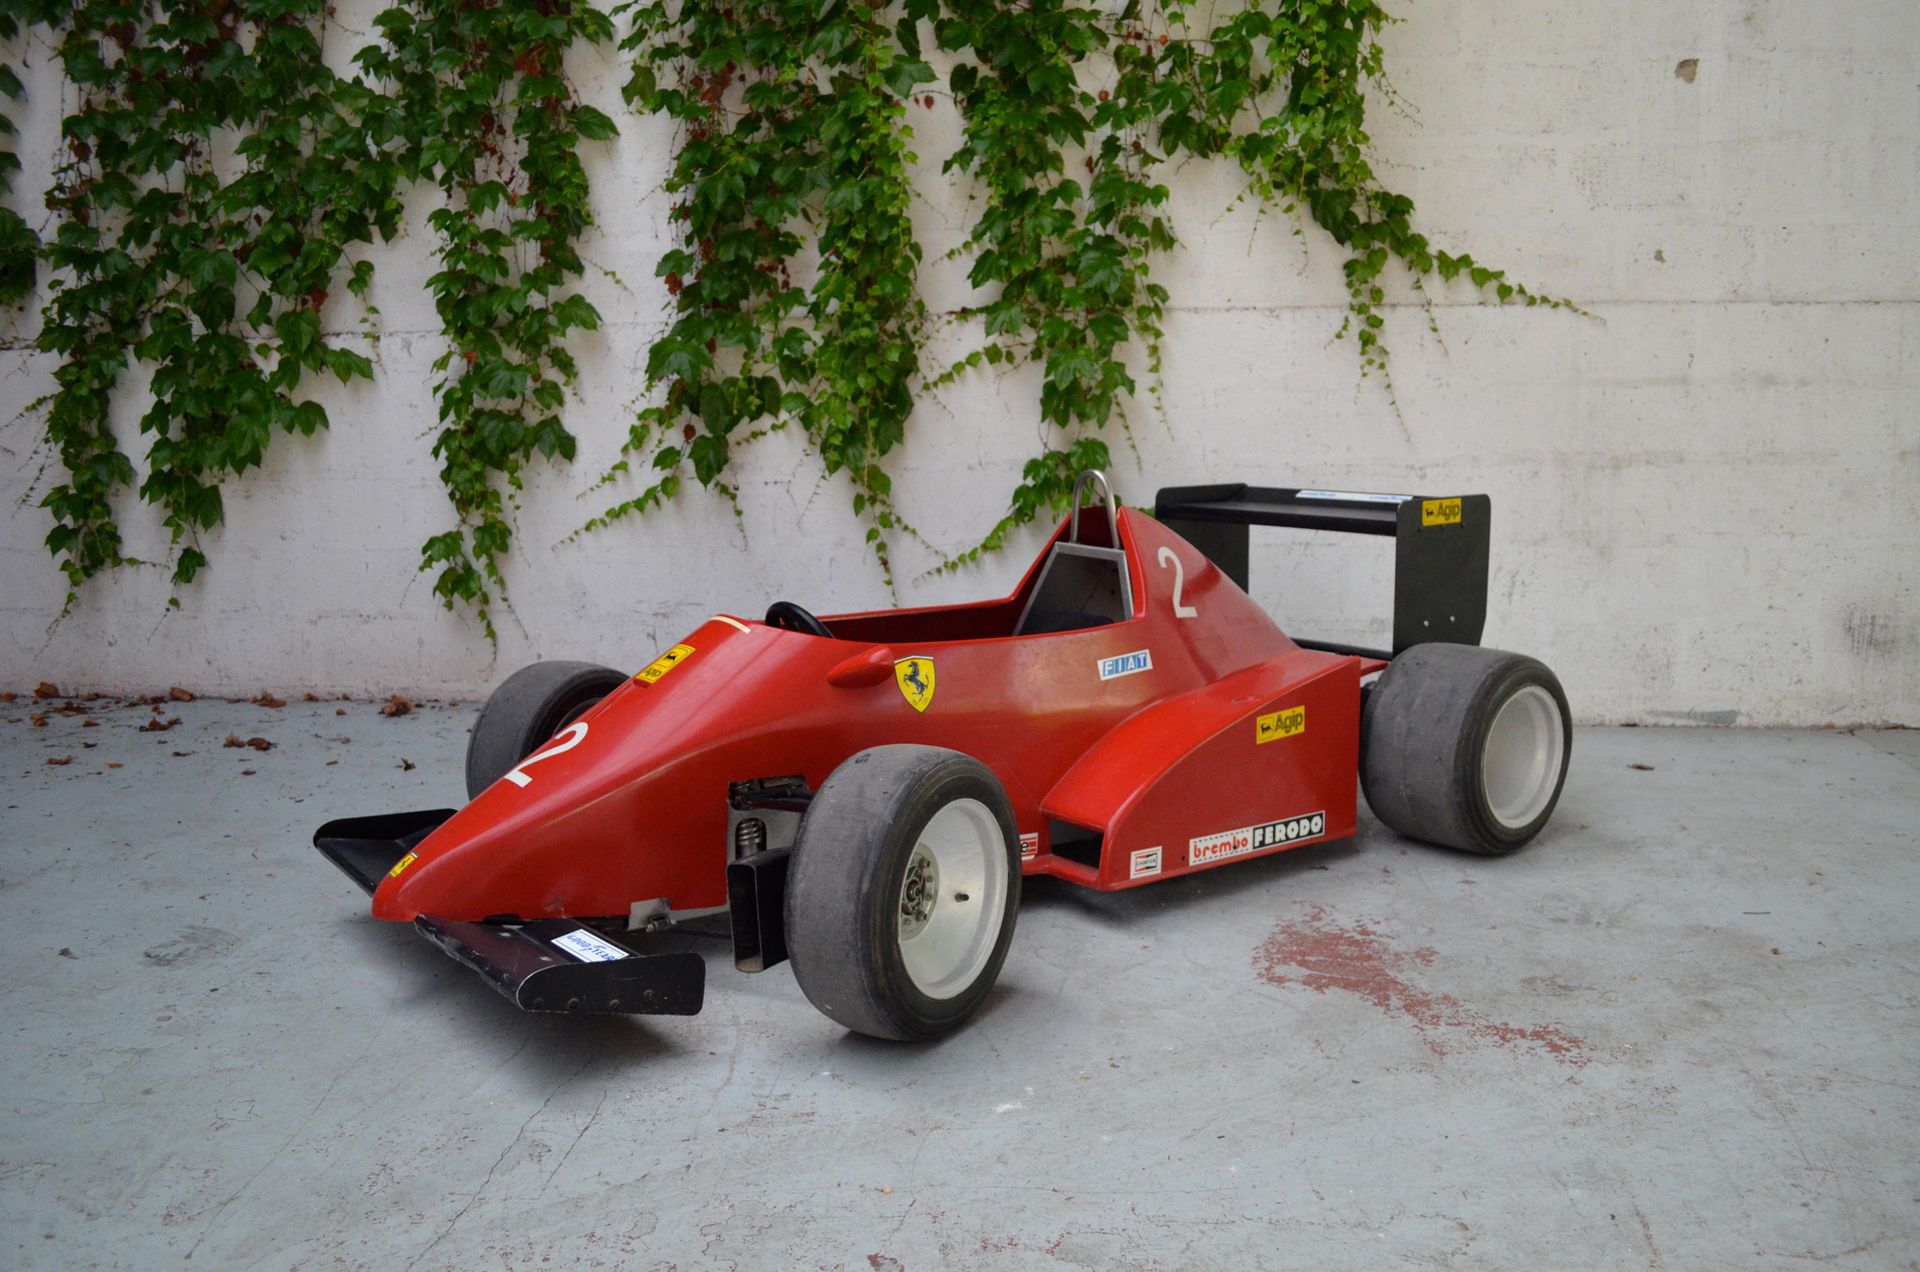 Monoplace Ferrari F1 pour 法拉利F1单座车为

有内燃机的儿童